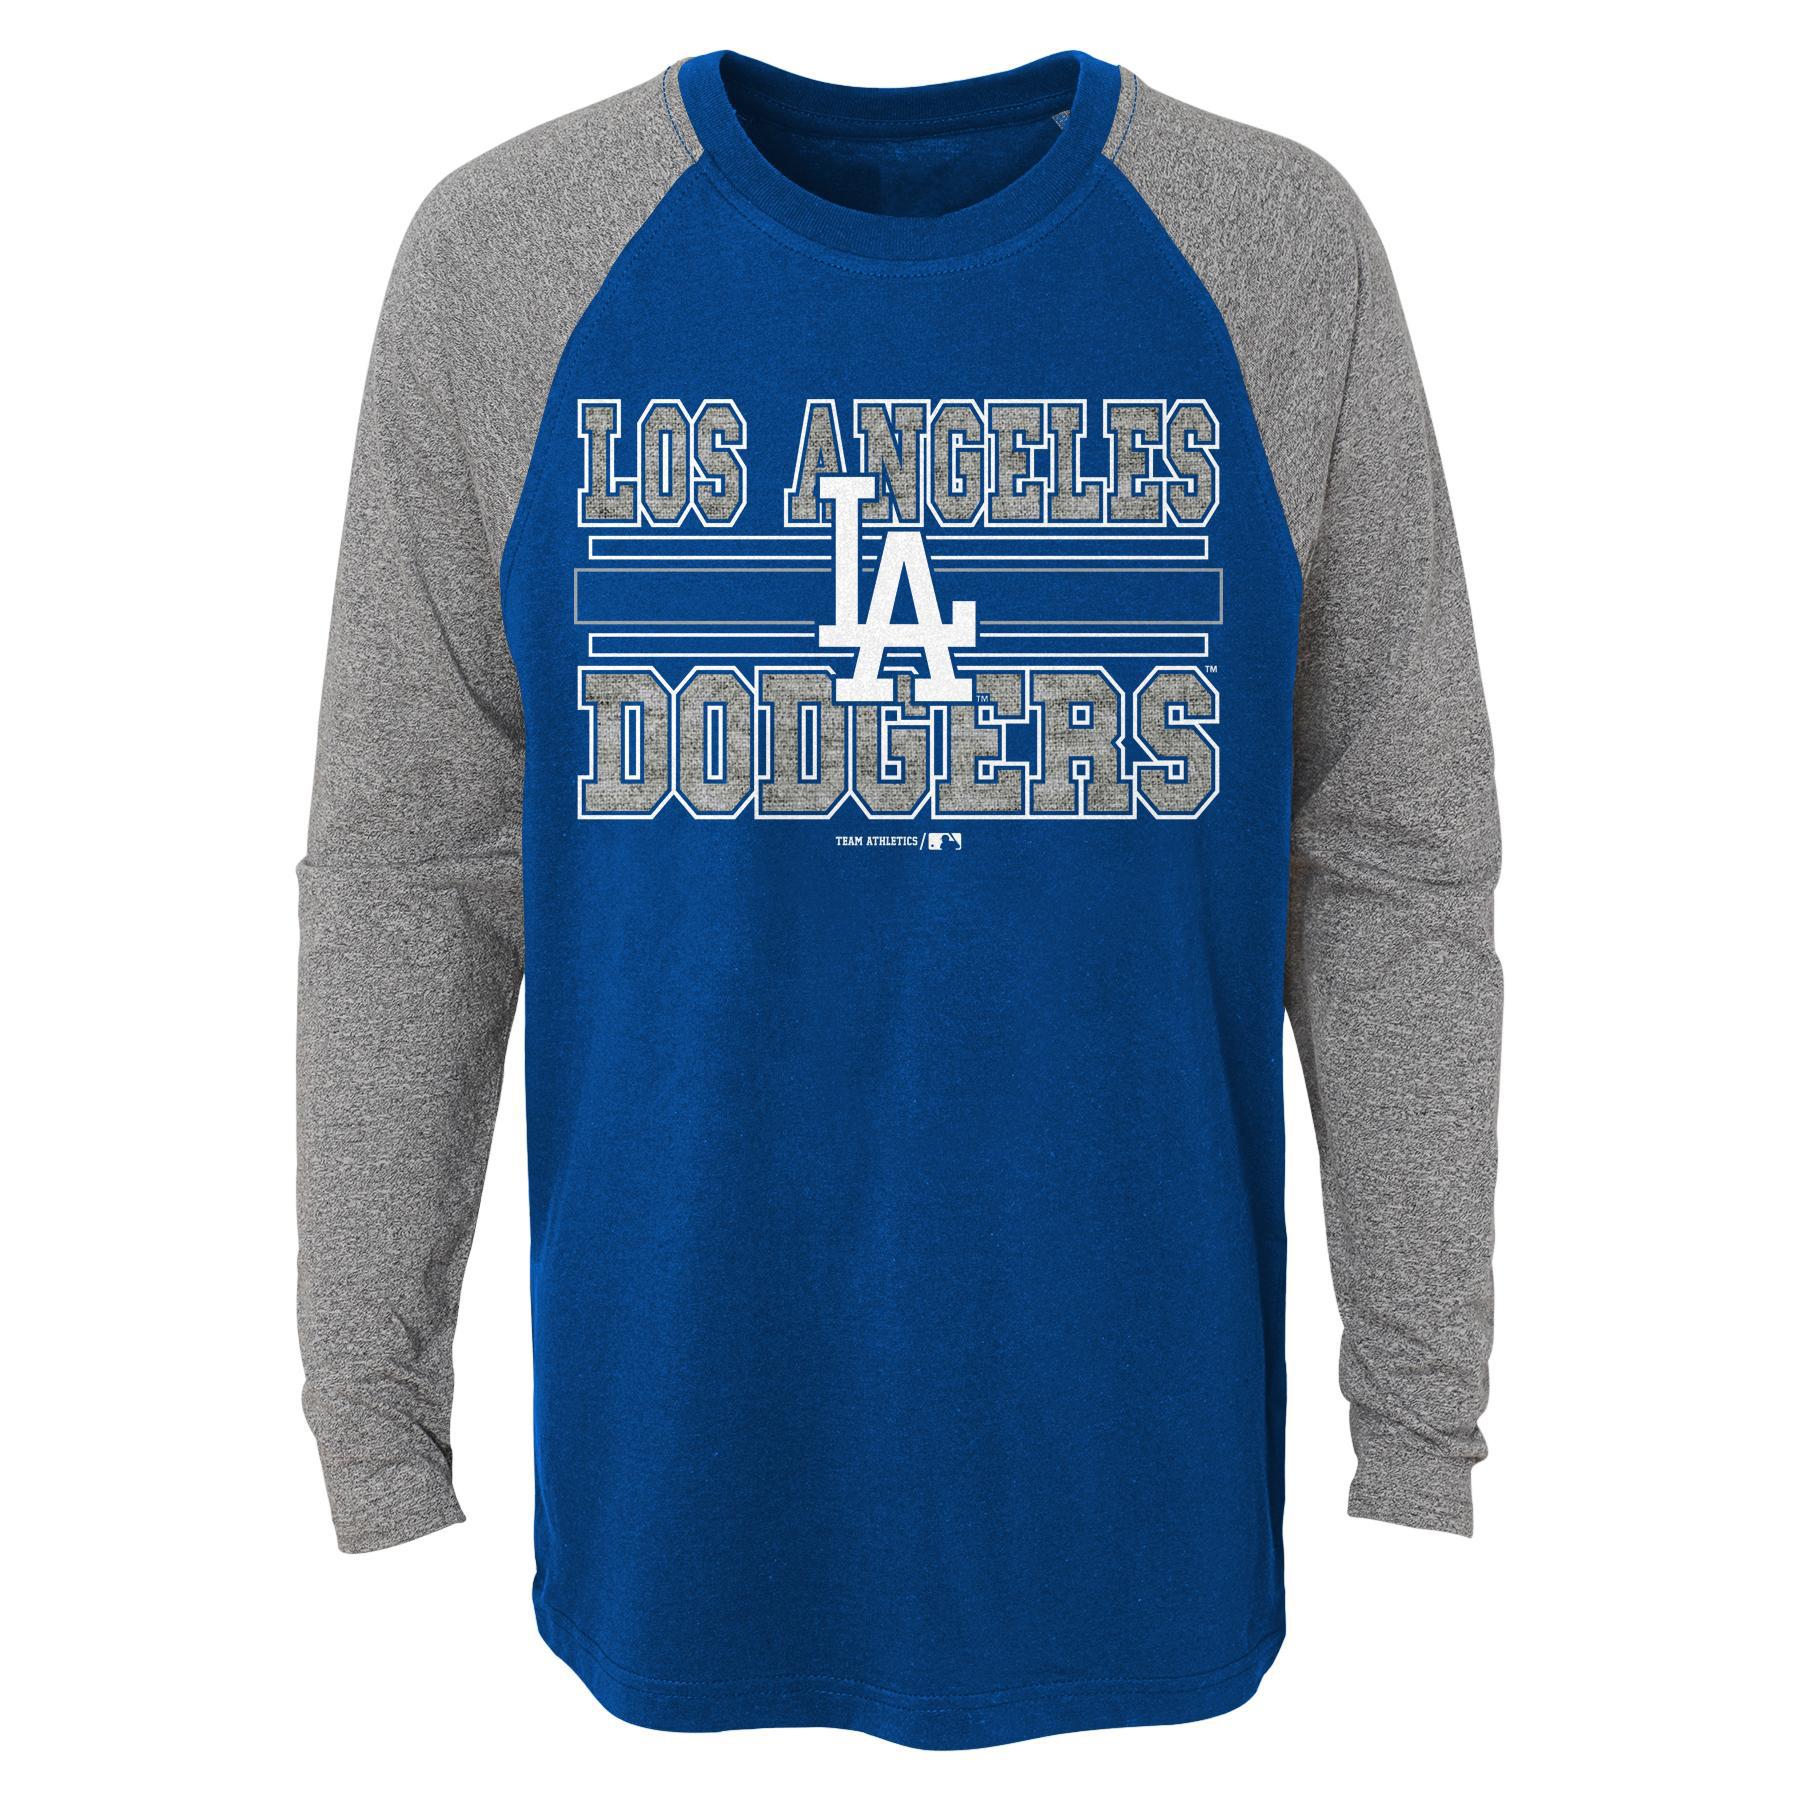 MLB Boys' Long-Sleeve T-Shirt - Los Angeles Dodgers